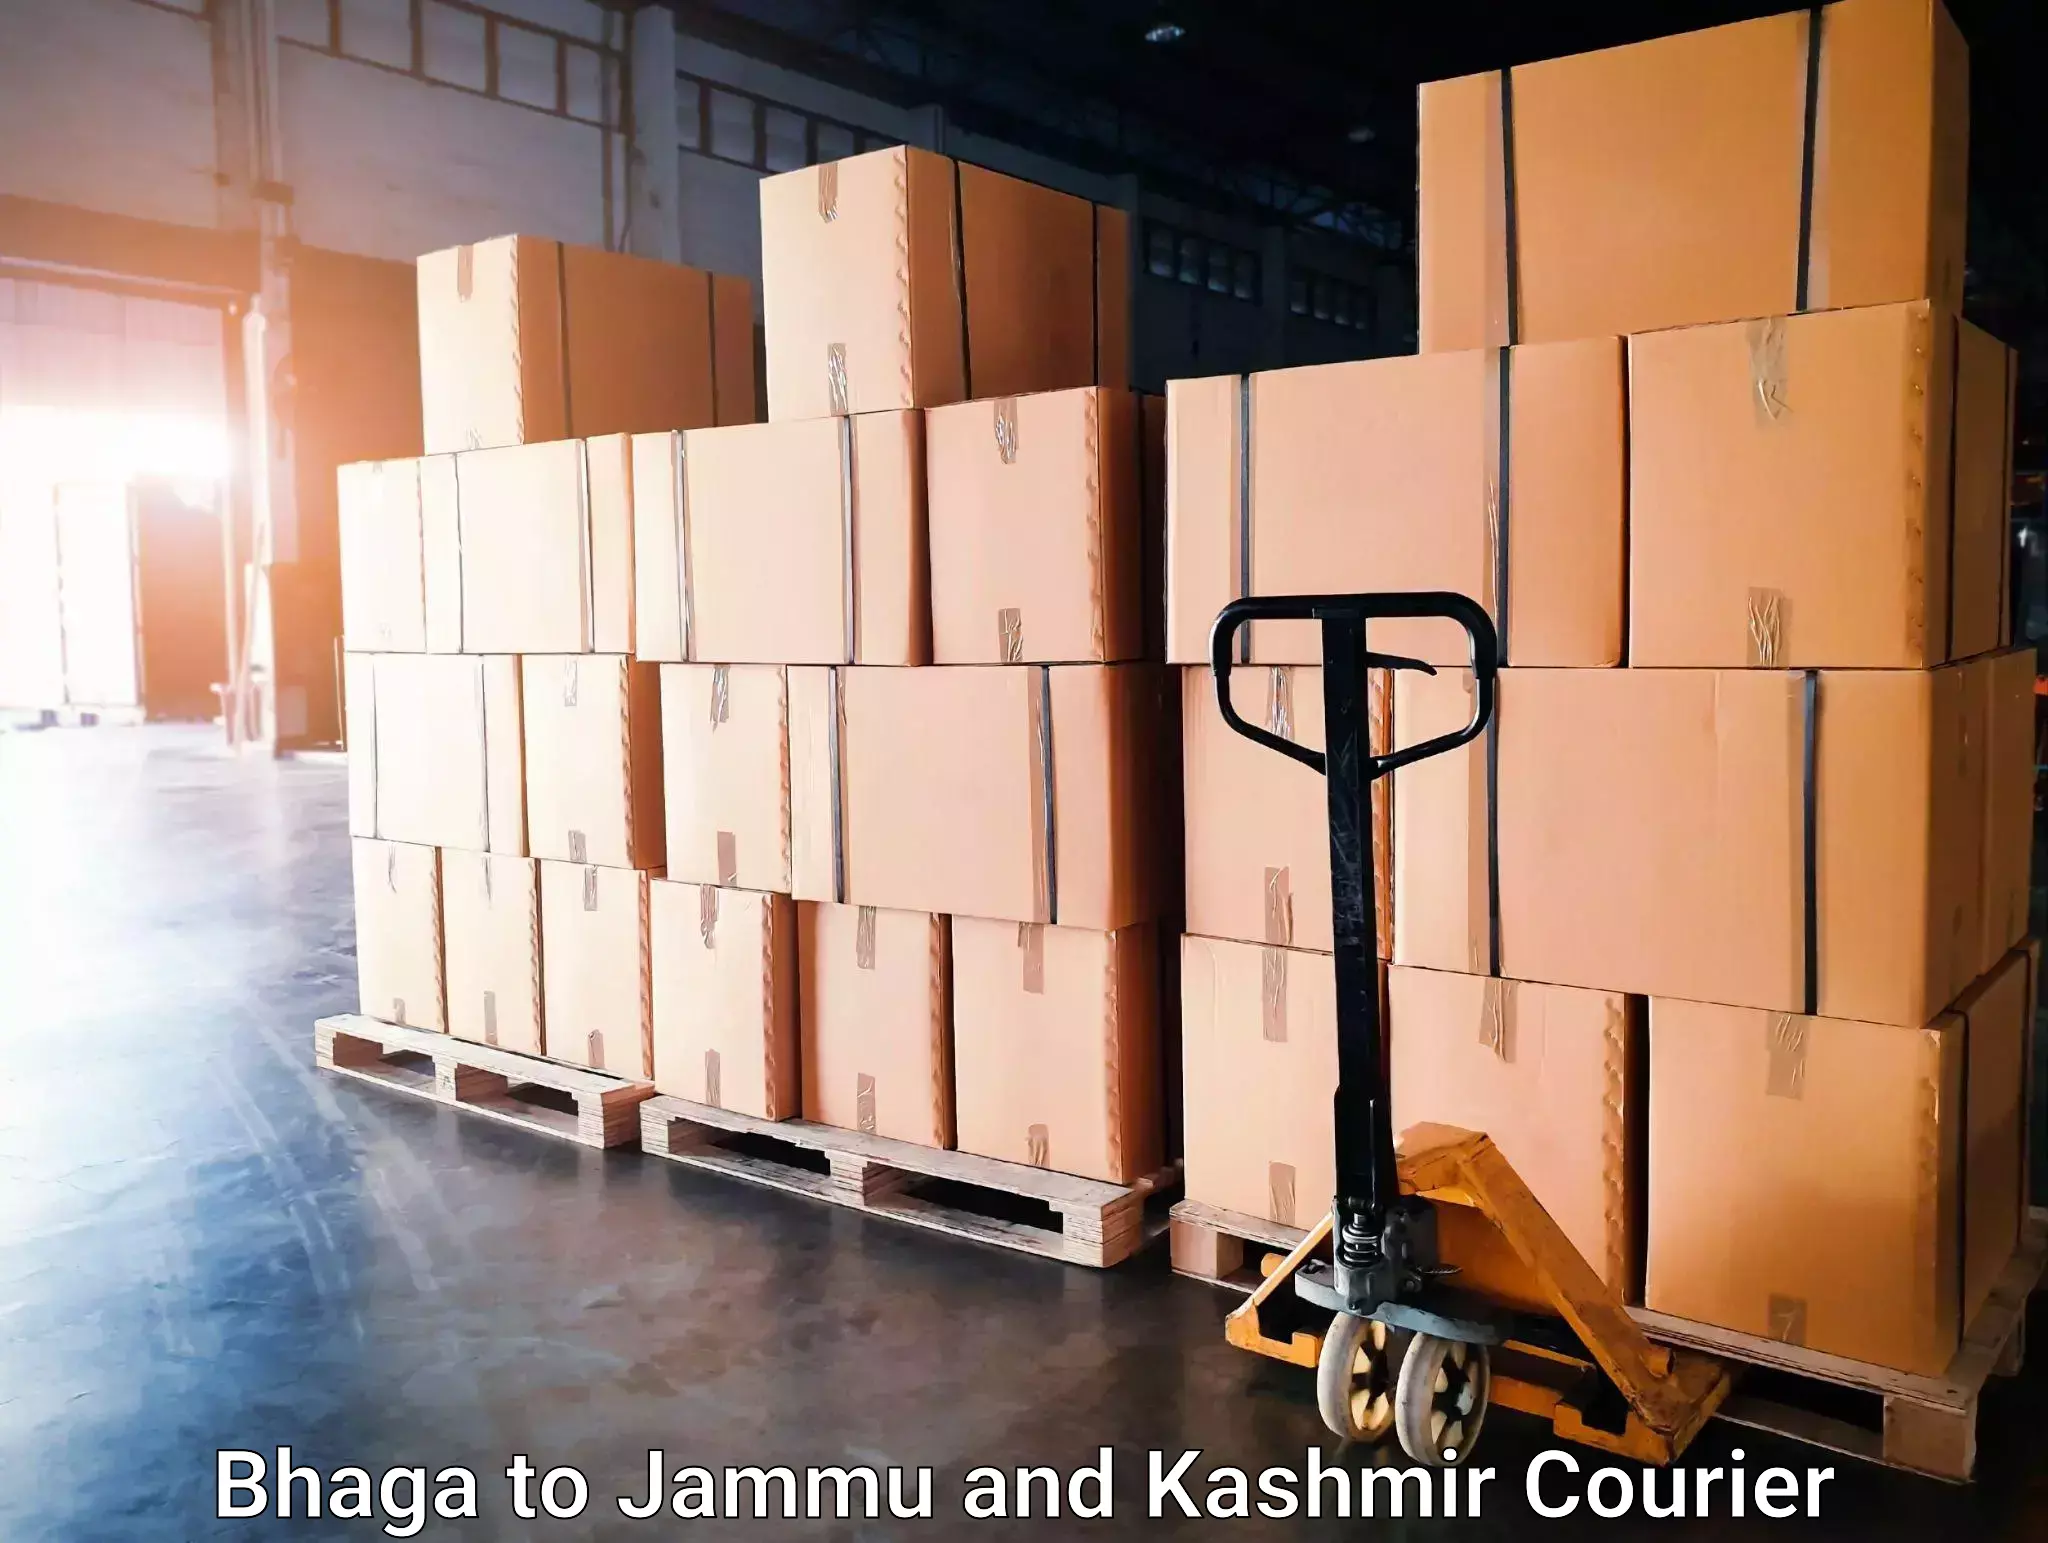 Expedited shipping methods Bhaga to Kargil